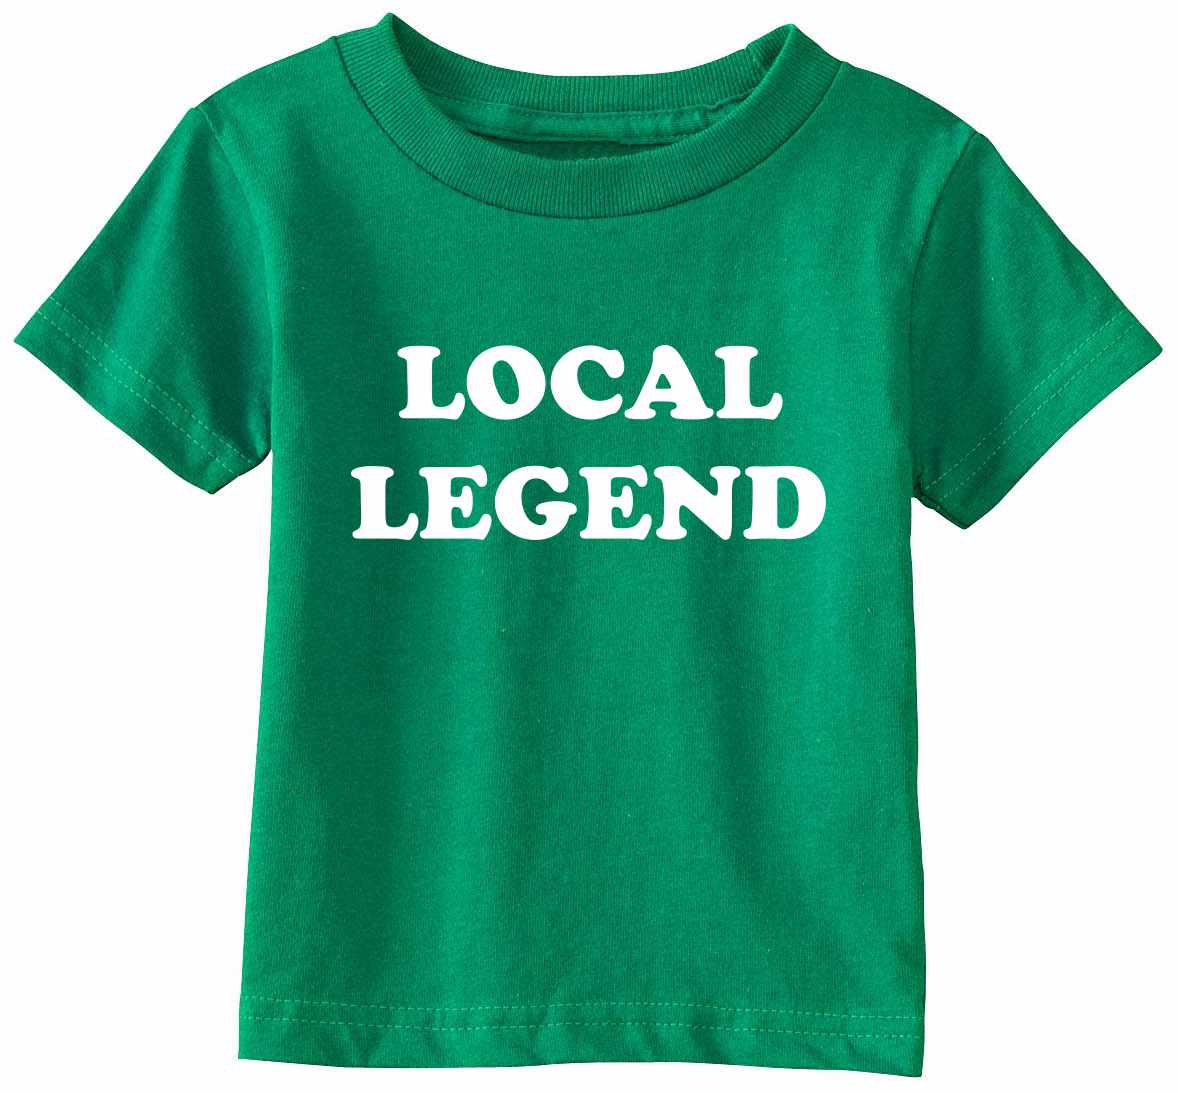 Local Legend on Infant-Toddler T-Shirt